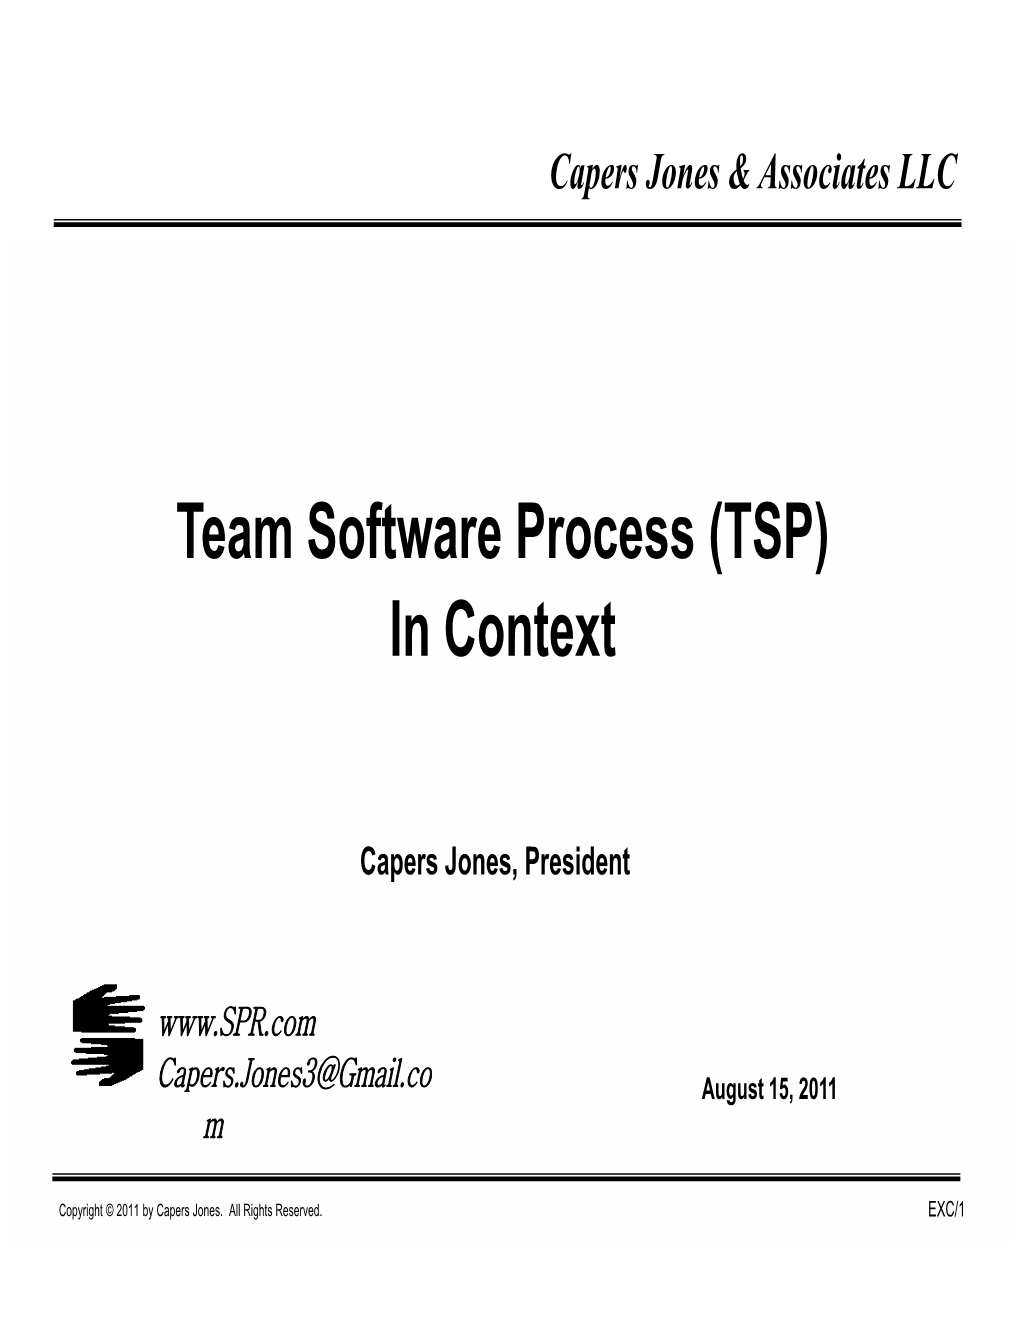 Team Software Process (TSP) in Context